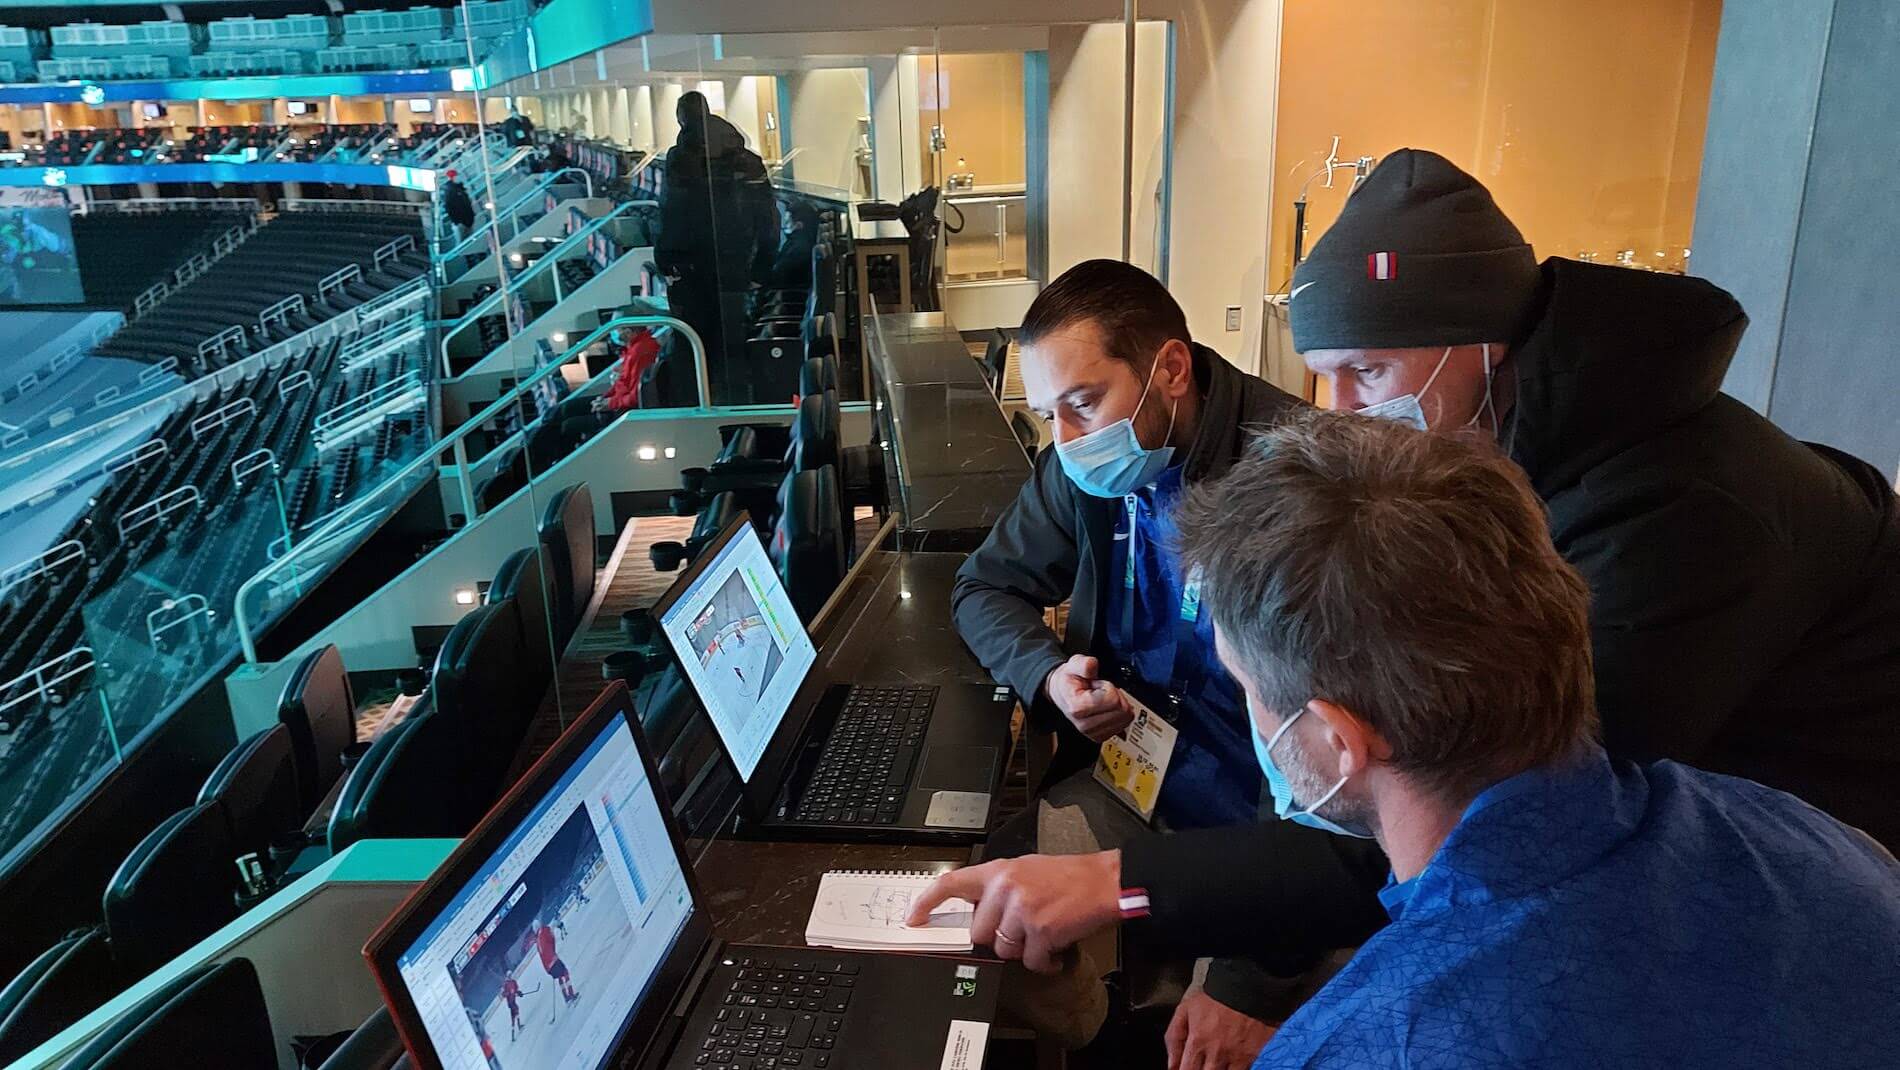 A few men watching hockey on laptop screens.